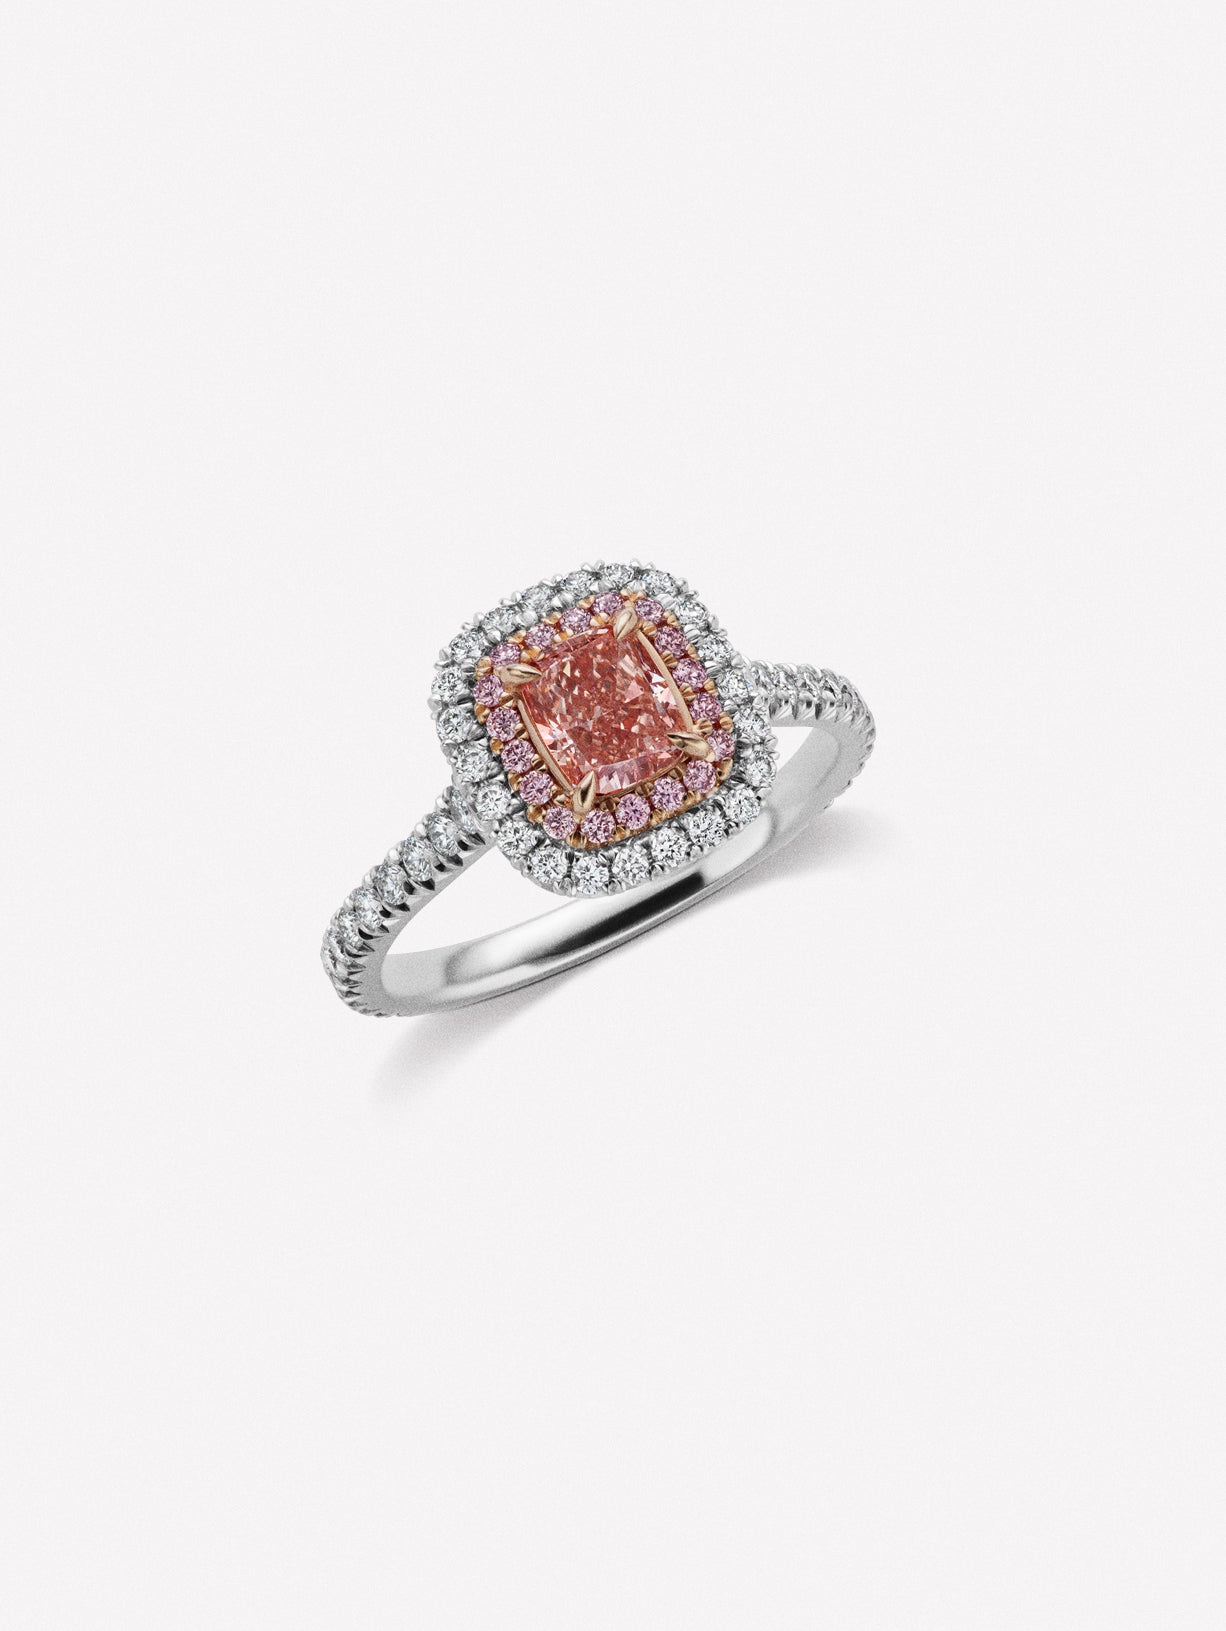 Fancy Orangy Pink Cushion Diamond Ring - Pink Diamonds, J FINE - J Fine, ring - Pink Diamond Jewelry, j-fine-orangy-pink-ring - Argyle Pink Diamonds